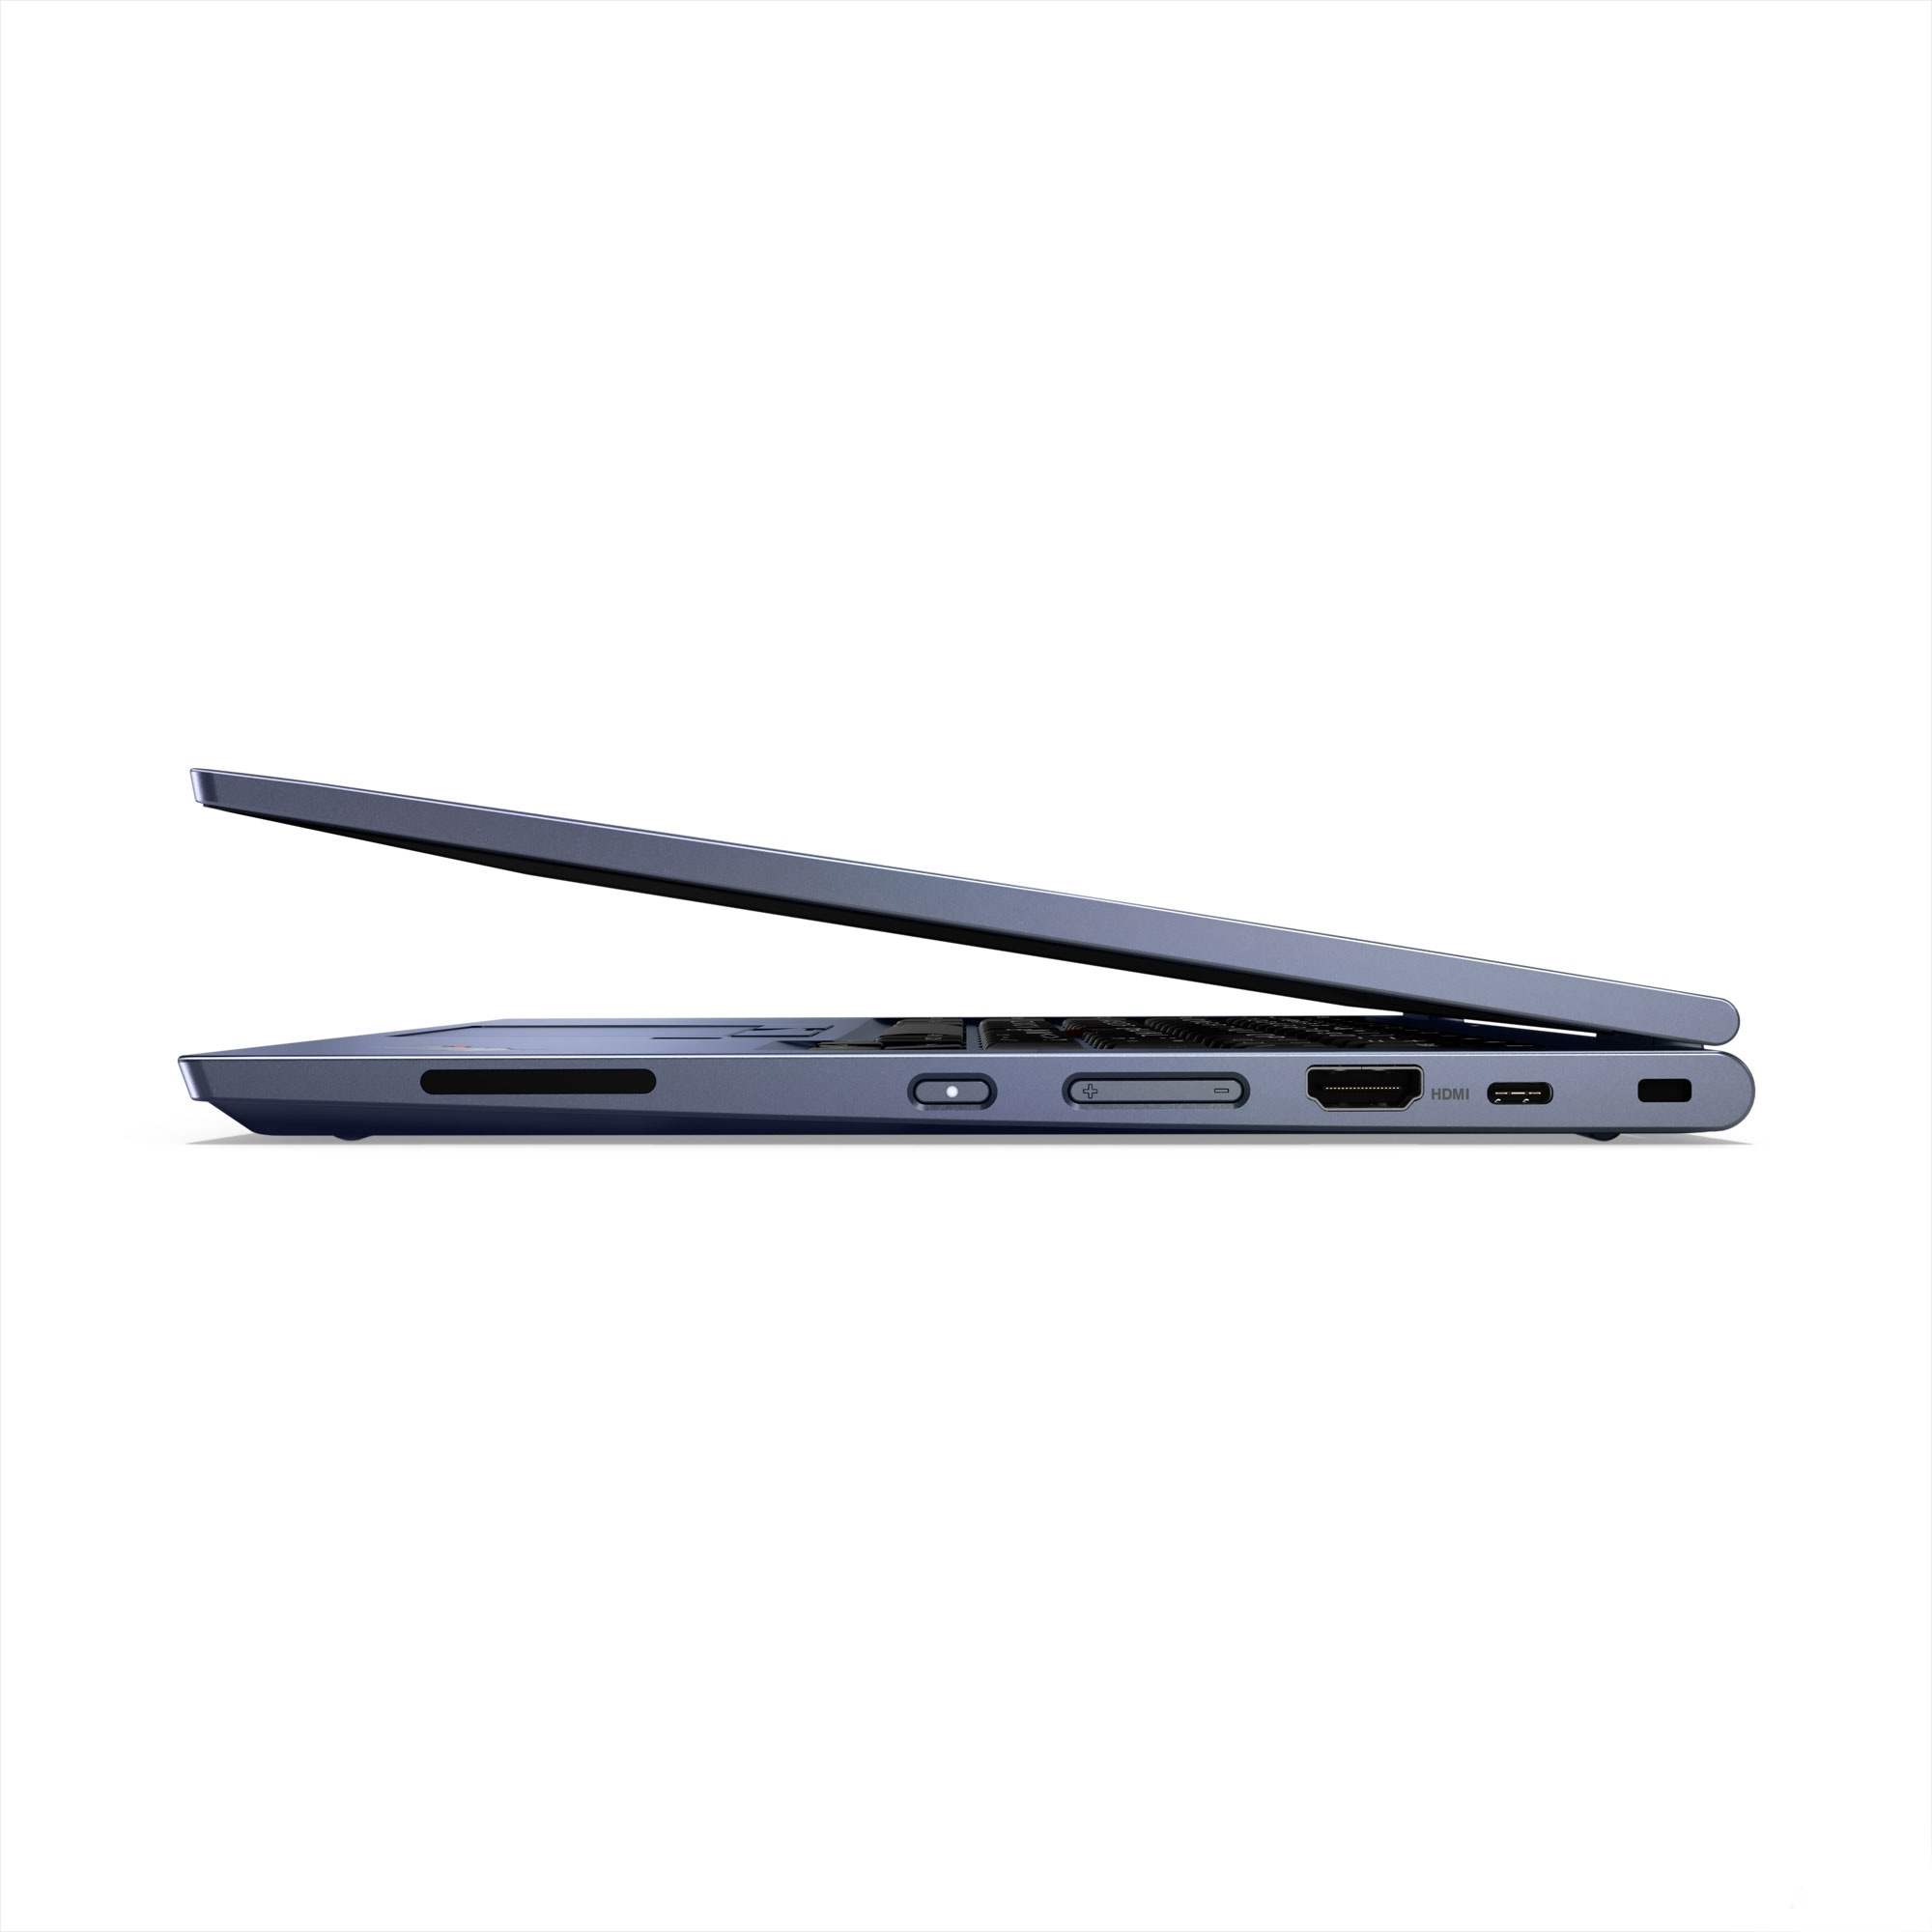 Lenovo ThinkPad C13 Yoga Chromebook 13.3" FHD 2-in-1s Touchscreen Laptop, AMD Athlon Gold 3150C, 4GB RAM, 32GB HD, Chrome OS, Blue, 20UX001PUS - image 6 of 7